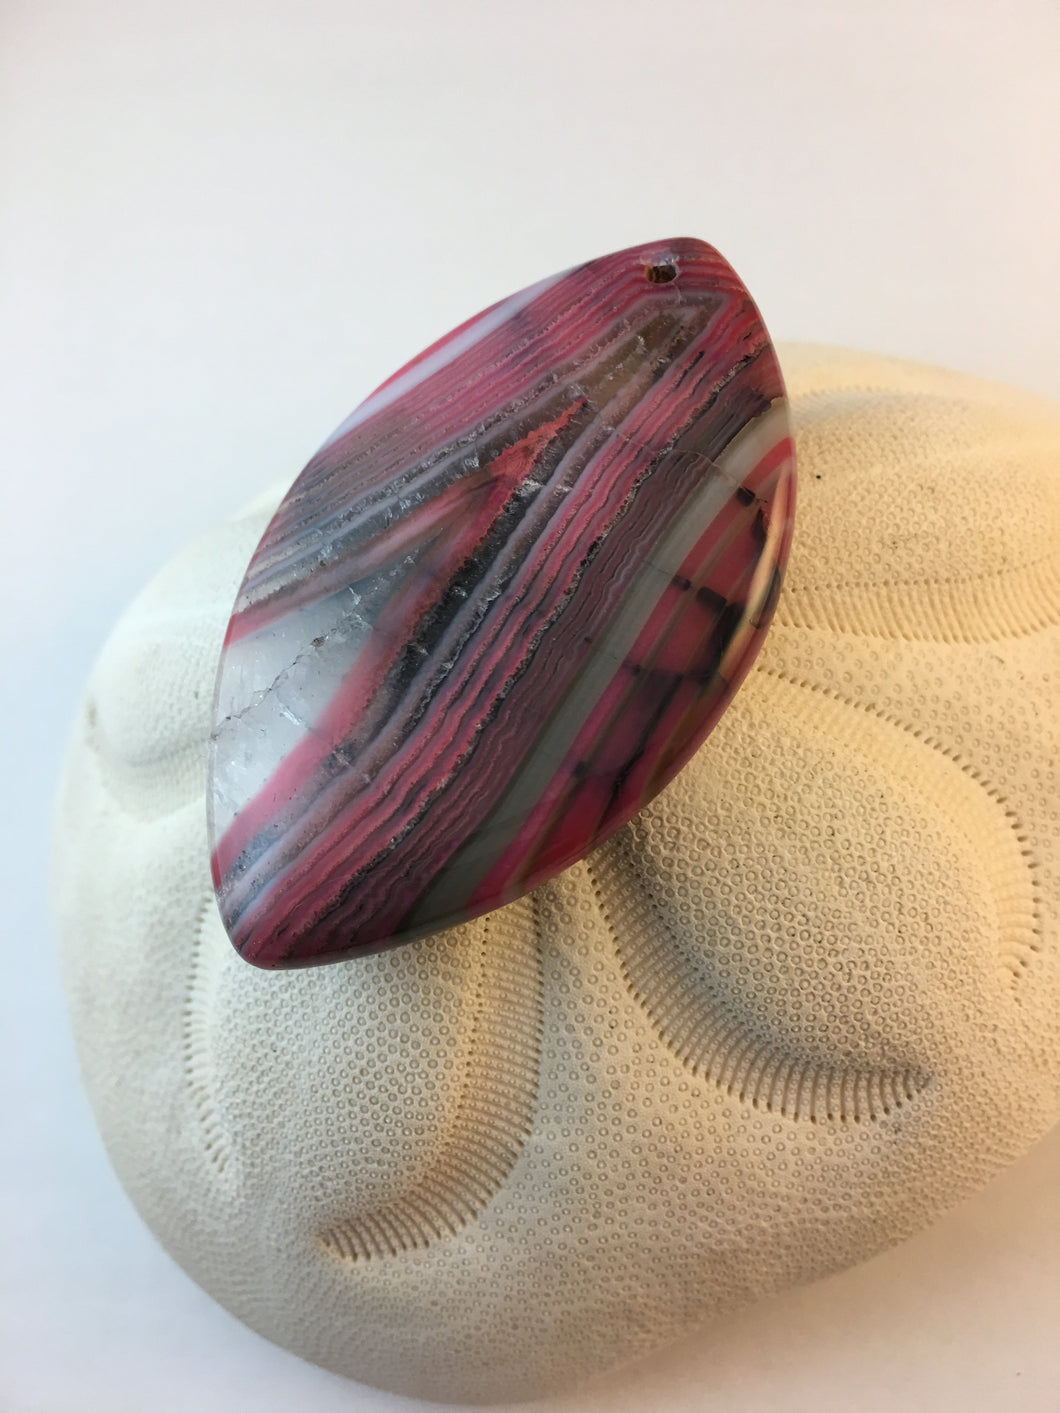 ZOEY-  Pink Onyx Druzy Geode Agate Pendant